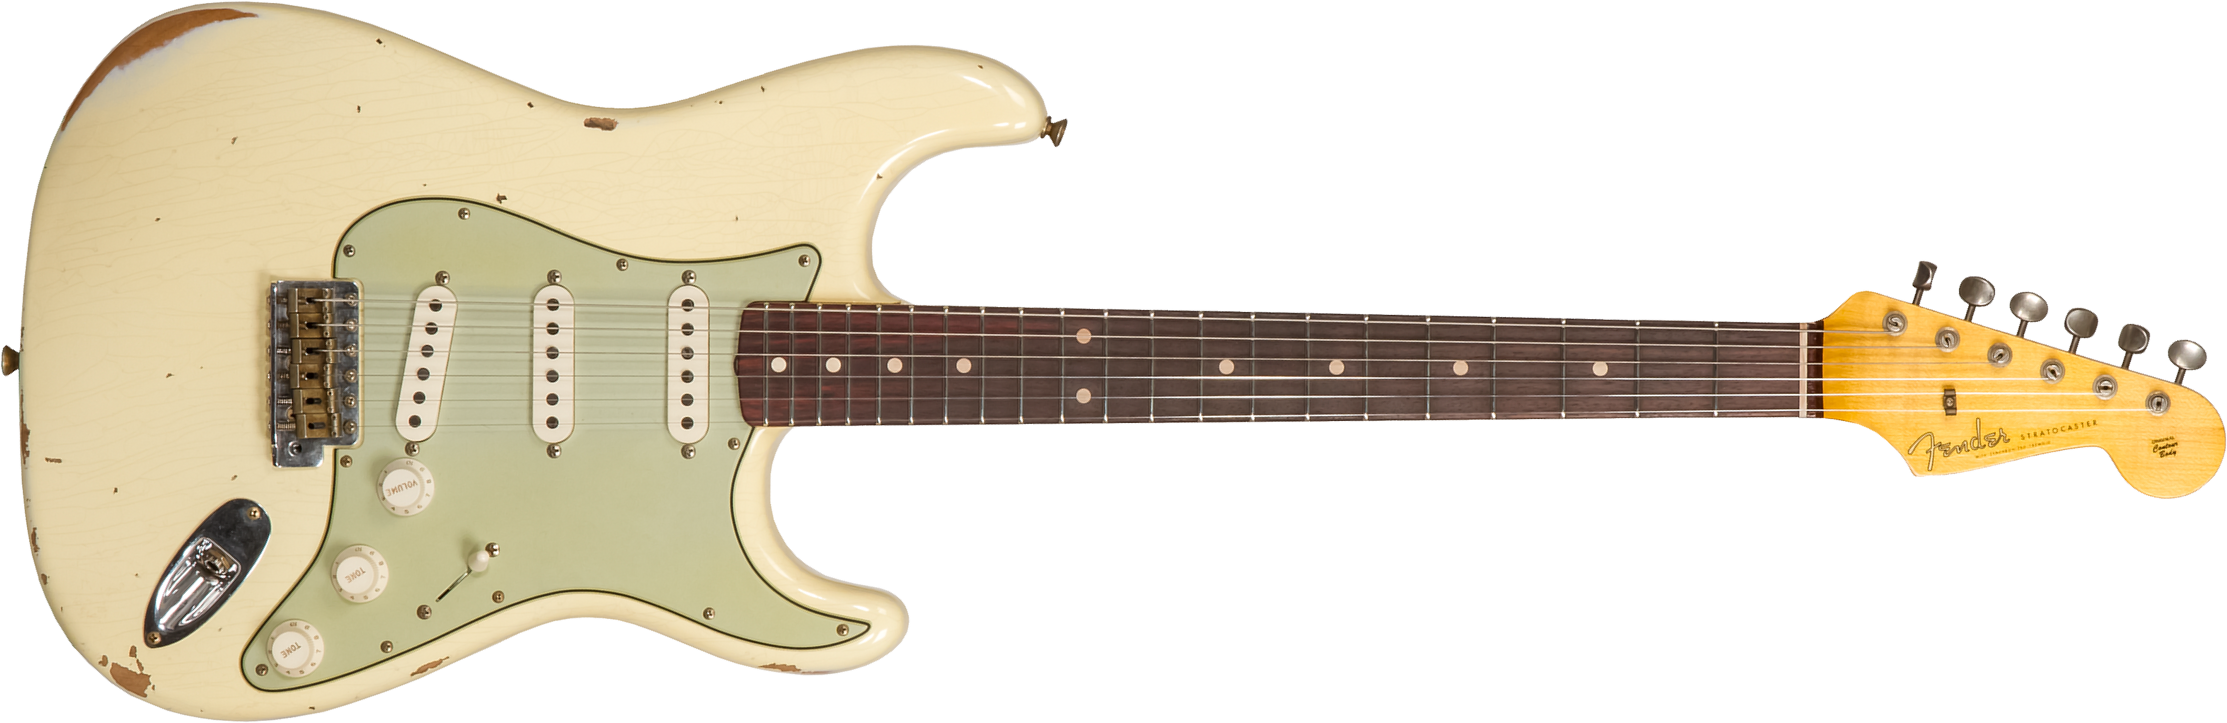 Fender Custom Shop Strat 1959 3s Trem Rw #r117393 - Relic Aged Vintage White - E-Gitarre in Str-Form - Main picture